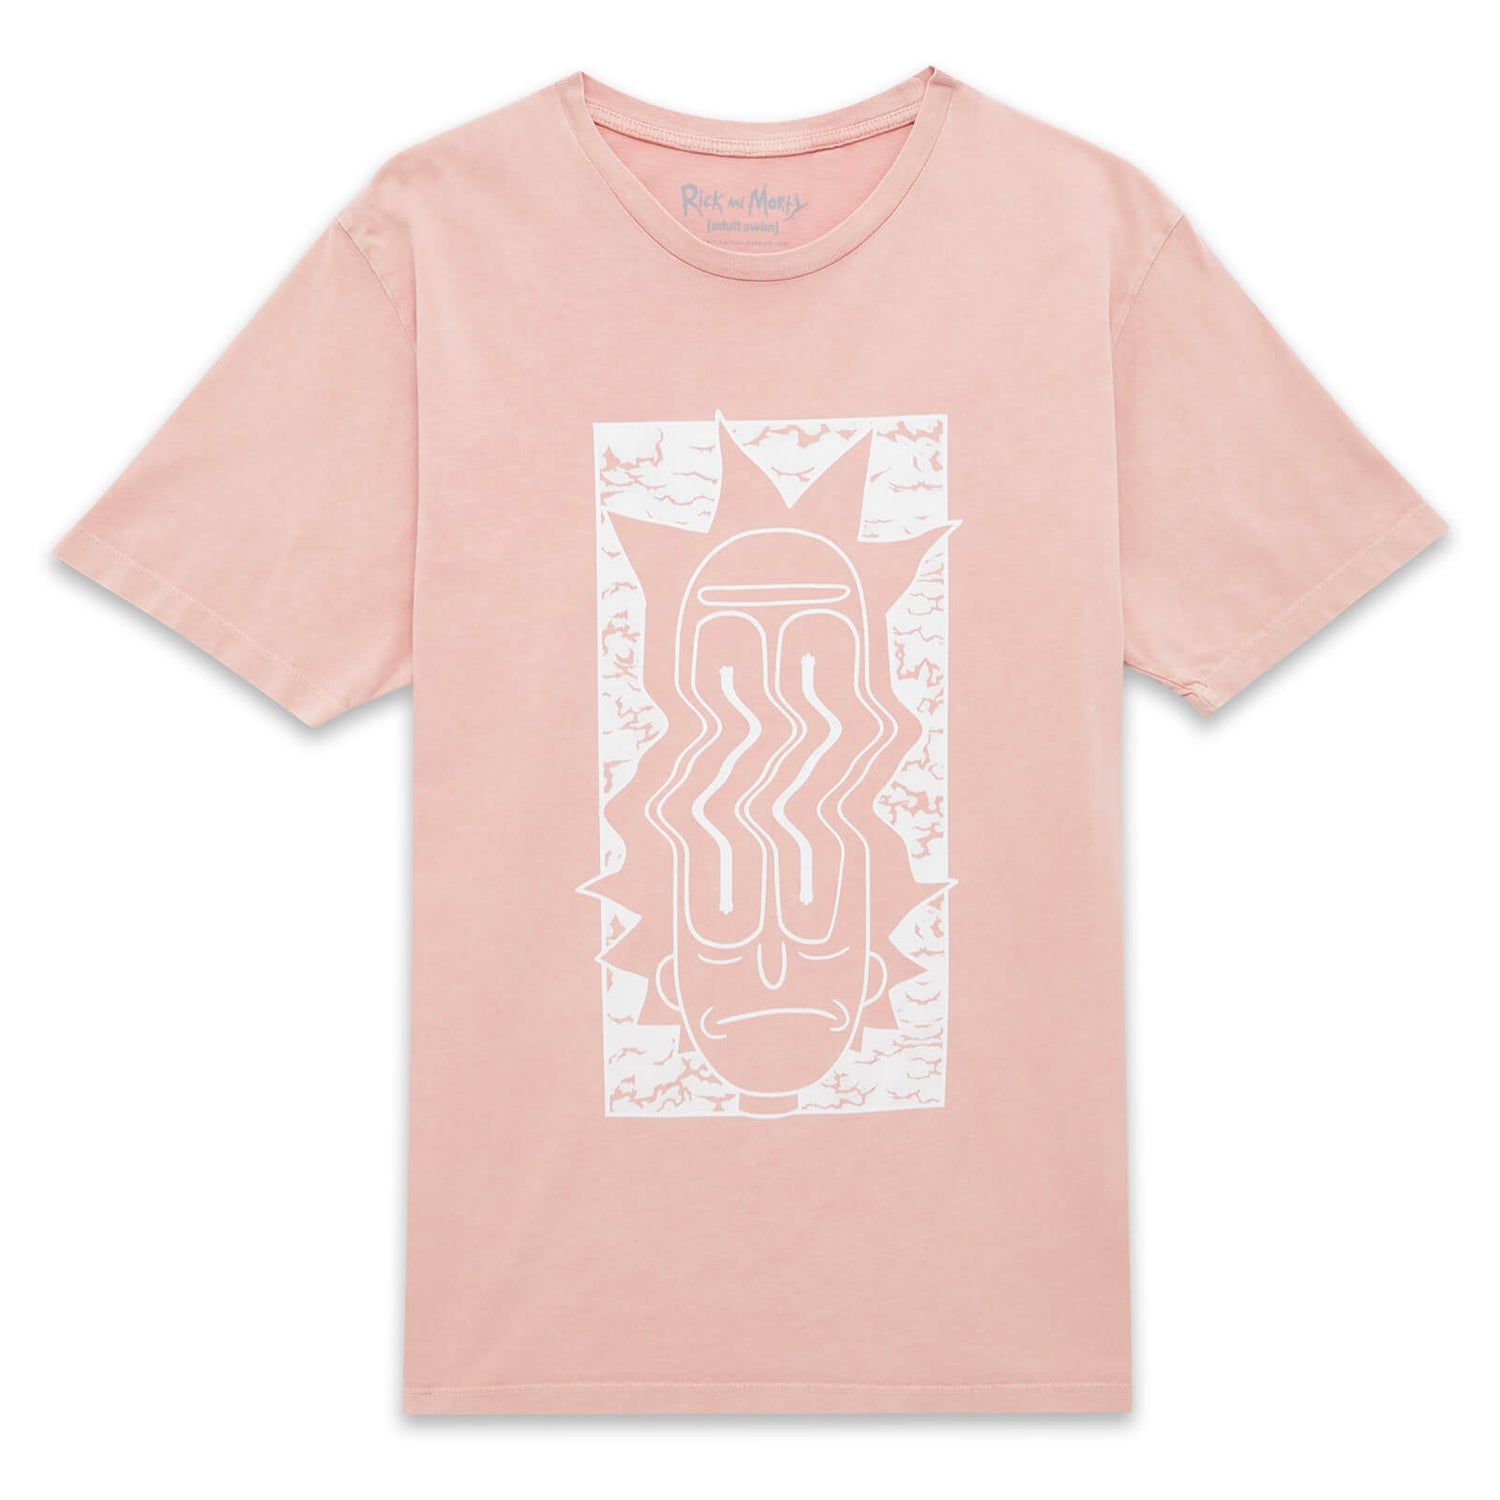 Rick and Morty Warped Unisex T-Shirt - Pink Acid Wash